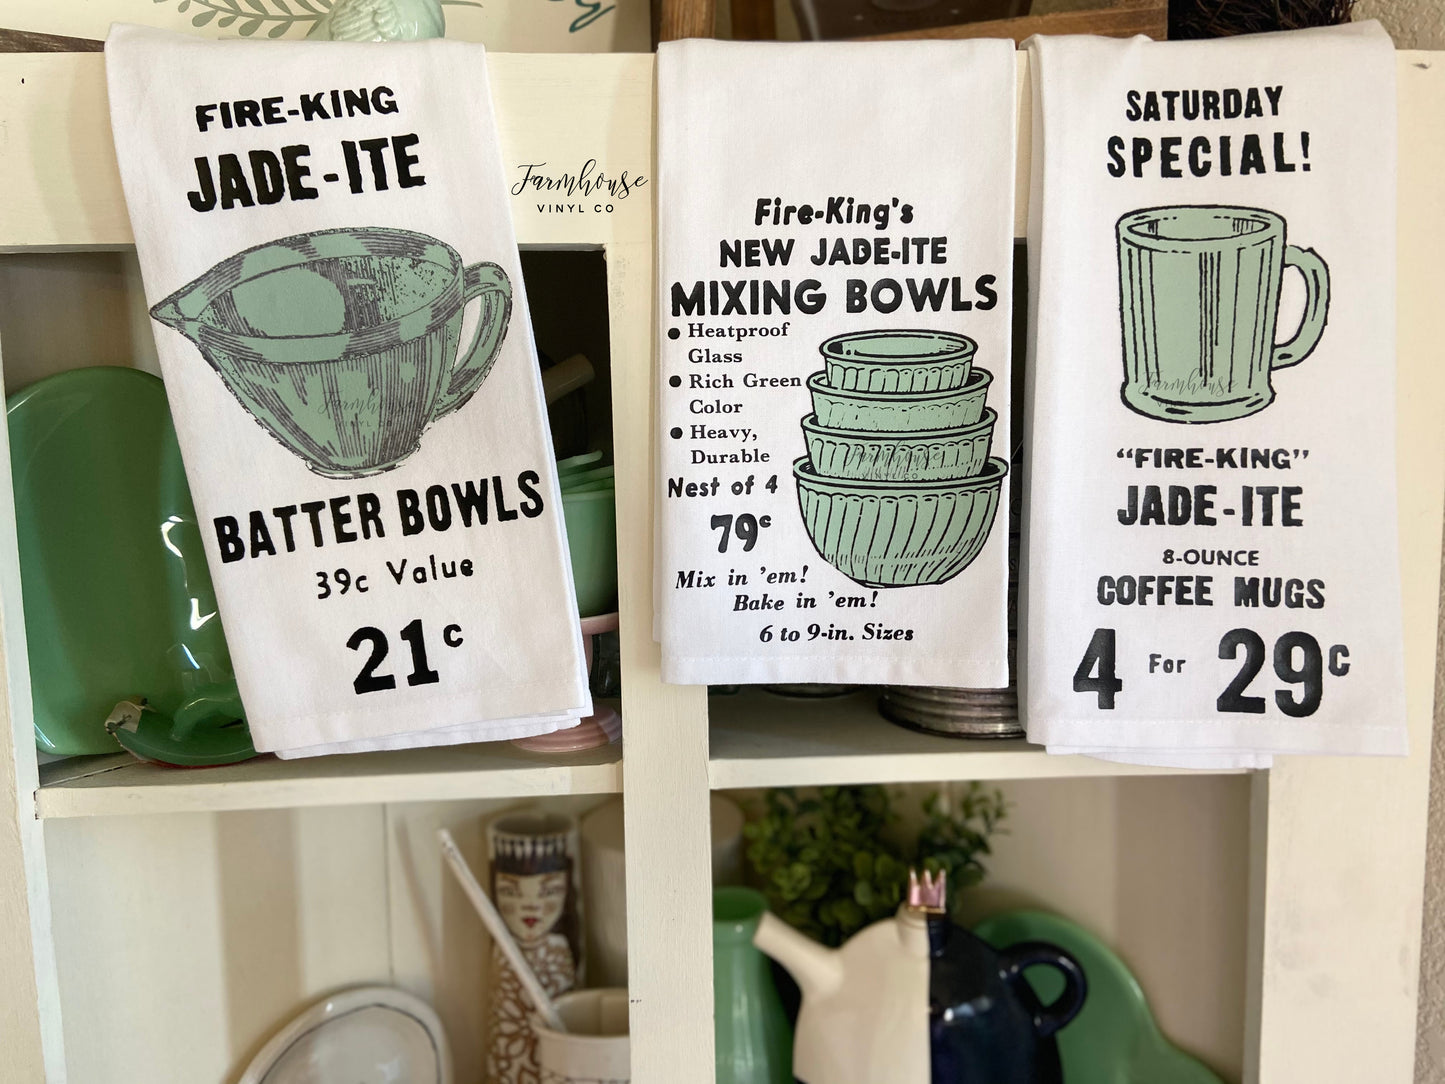 Jadeite Advertisement Towels - Farmhouse Vinyl Co